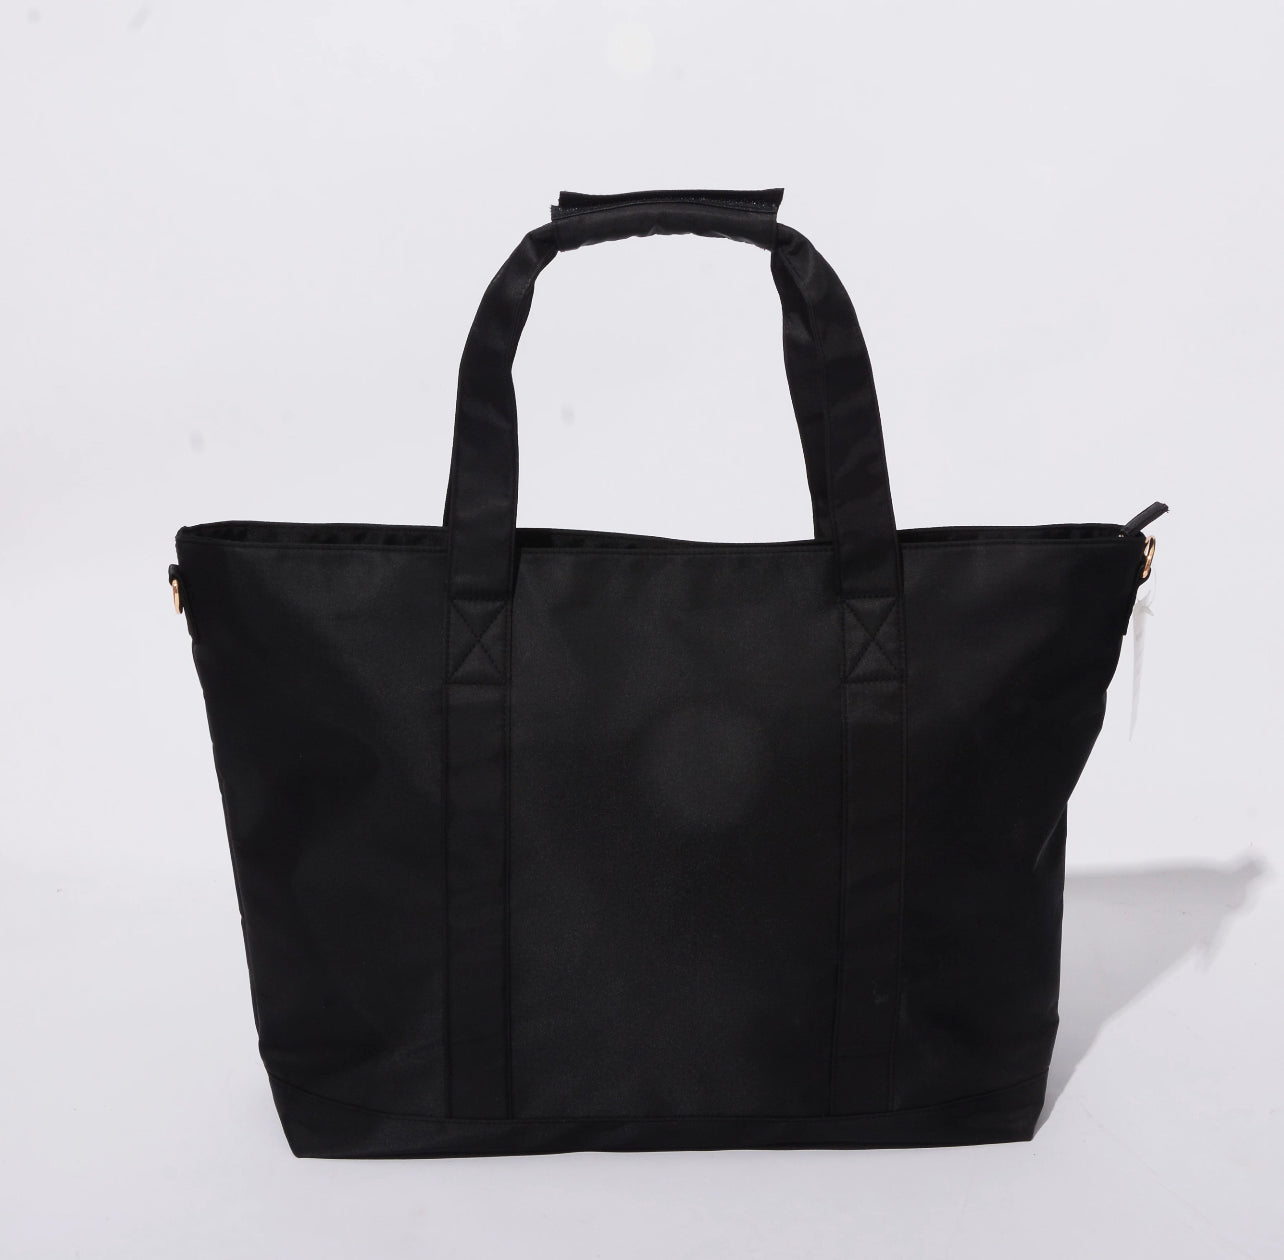 Moisture Proof Plain Black School Bags at Best Price in Mumbai | Jk Bags